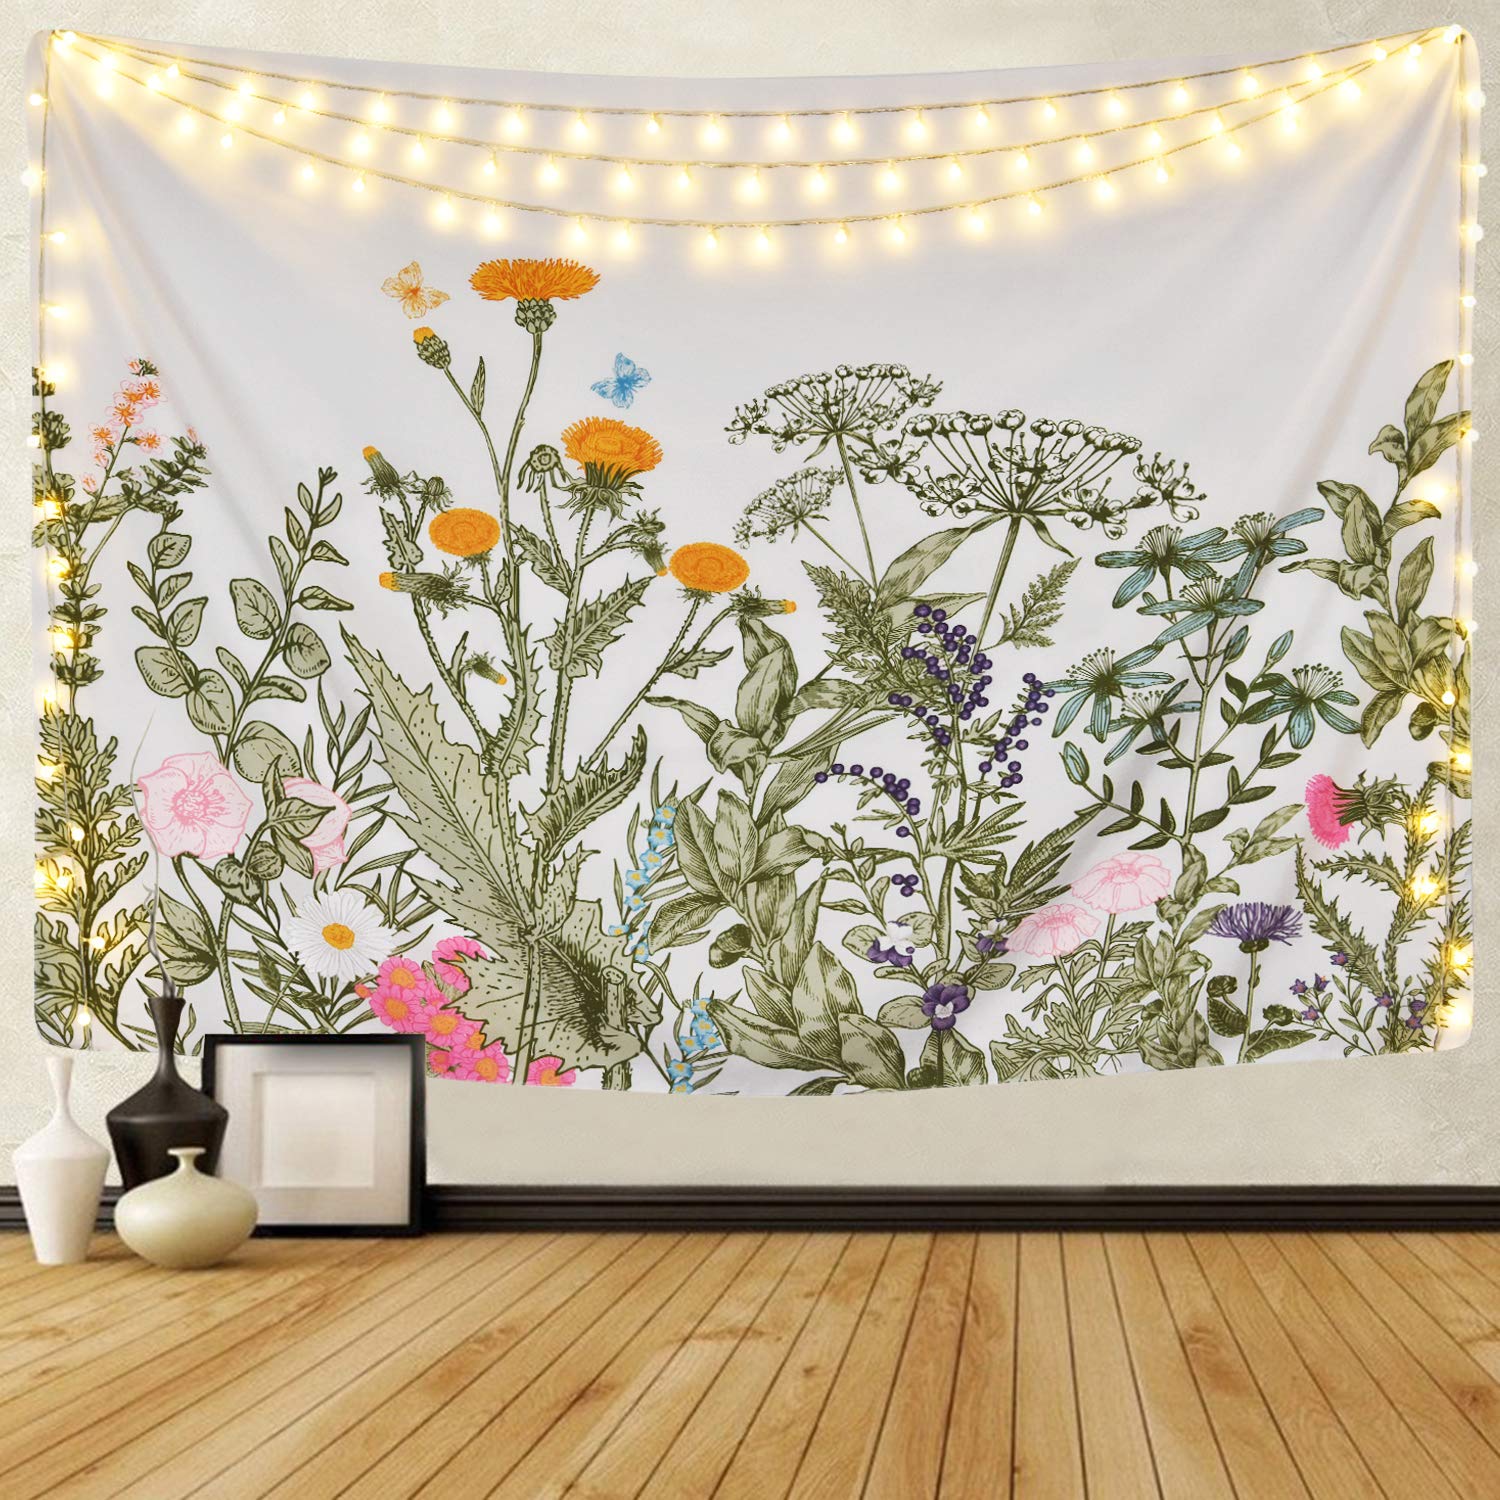 Abstract Plants Flower Tapestry Aesthetic Art Wall Hanging Tapestry Flower  Print Tapestry for Bedroom Living Room Dorm Home Decor 60 x 60 in